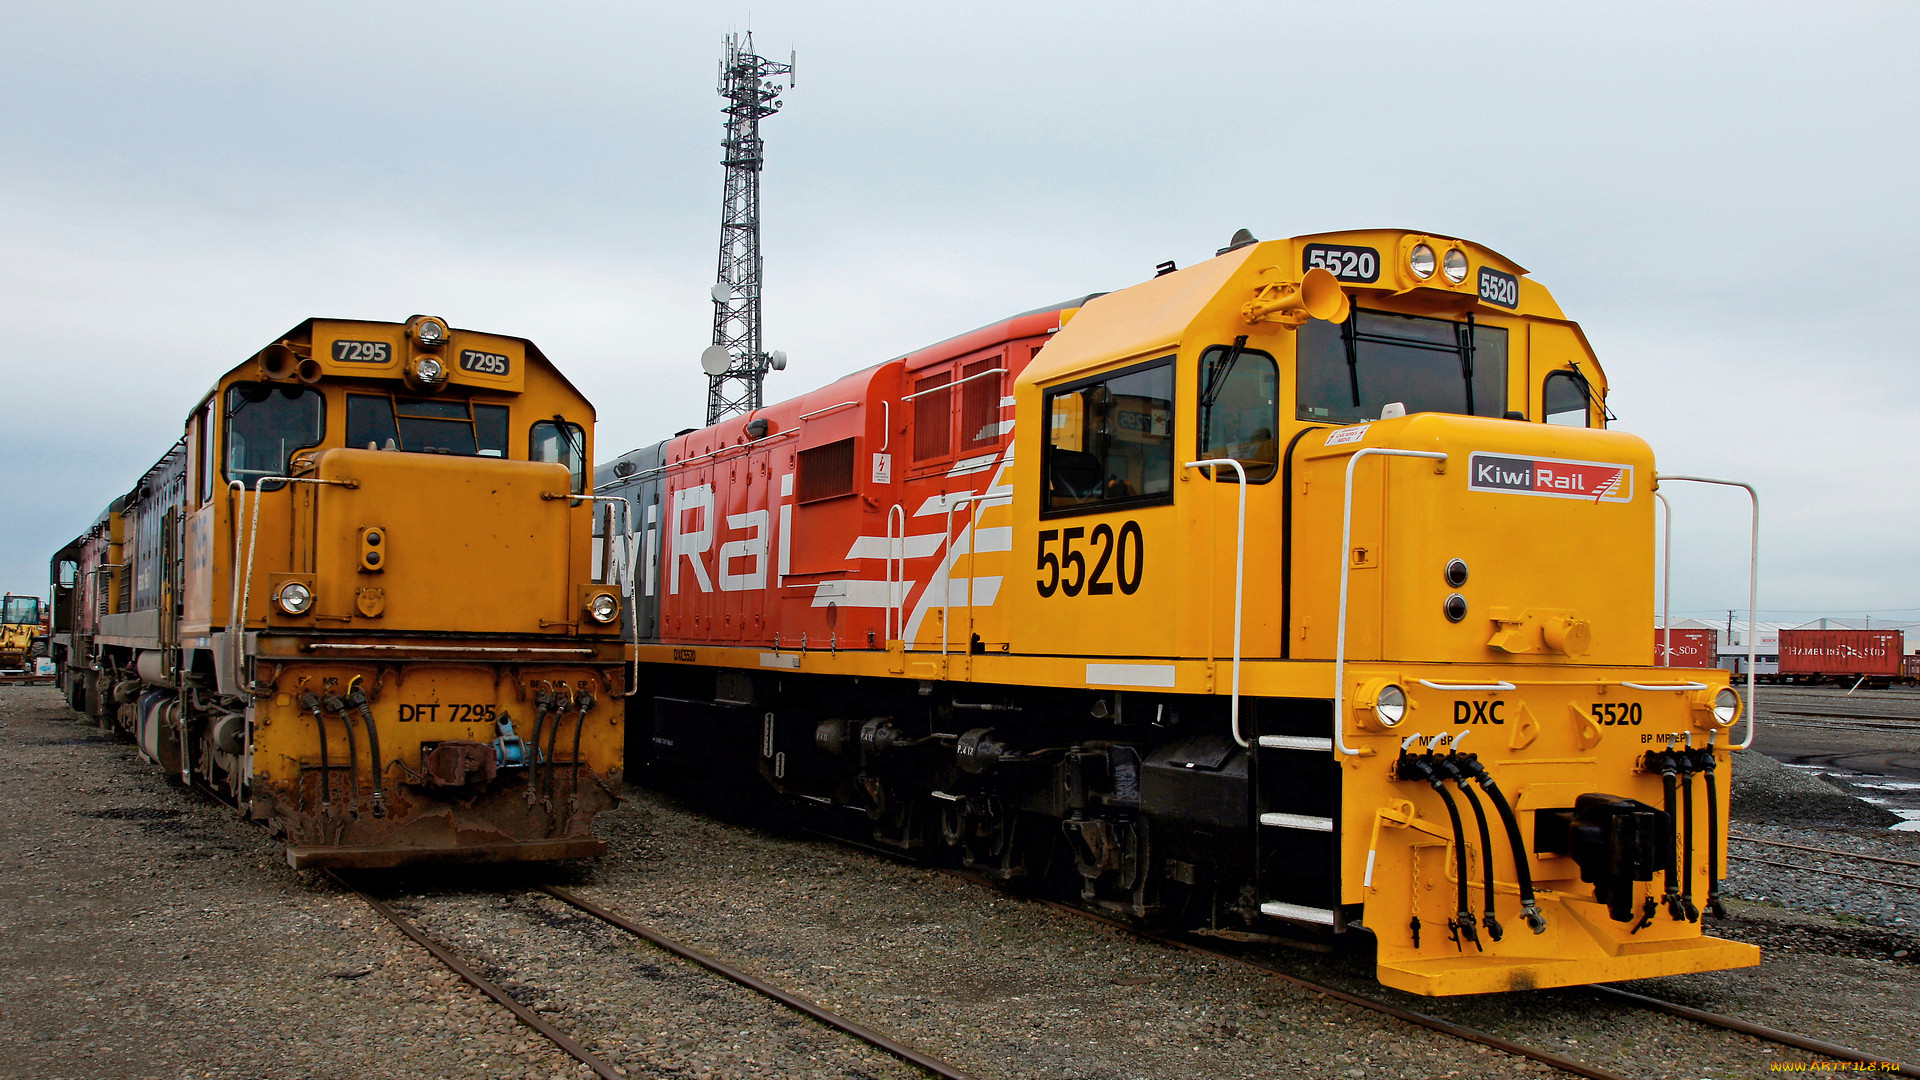 kiwirail dft 7295 and dxc 5520 locomotives, , , , , , 